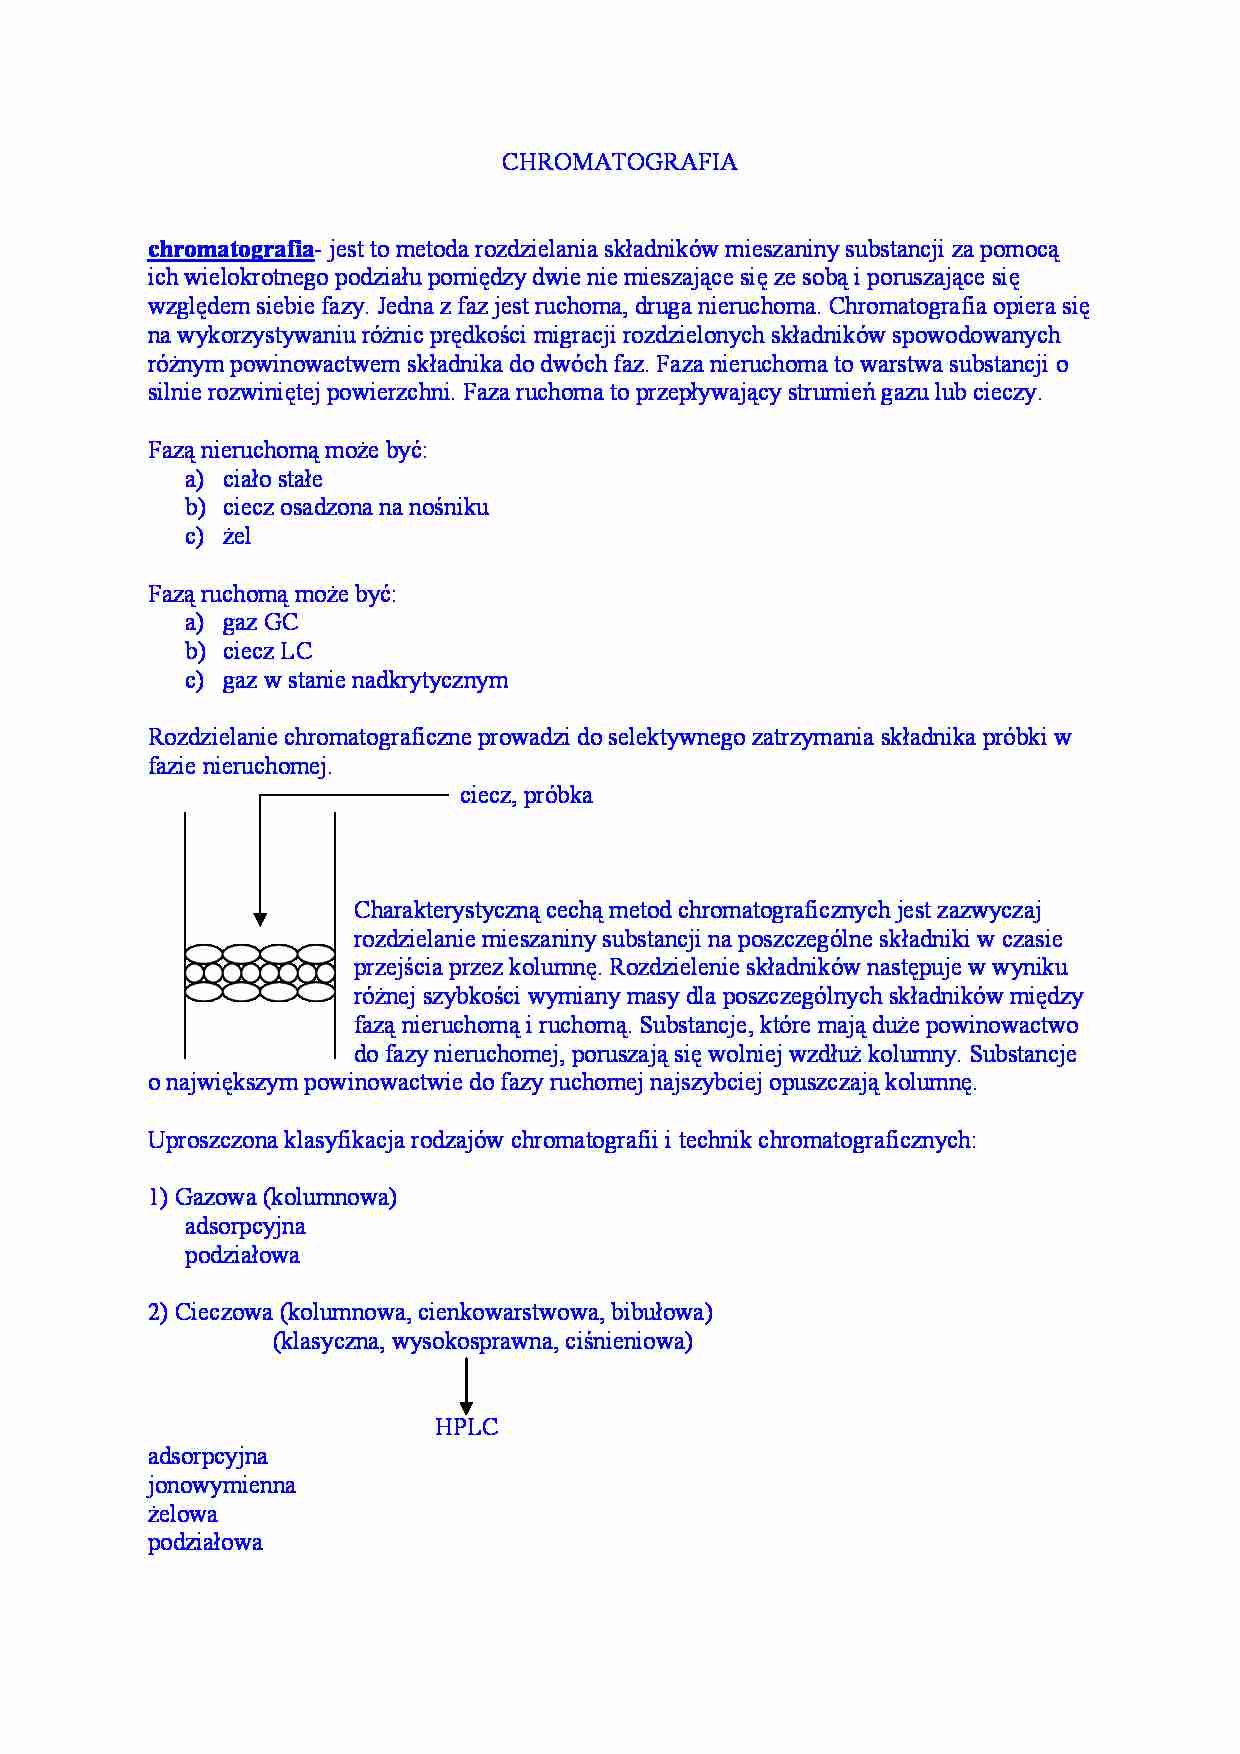 Chromatografia - faza ruchoma i nieruchoma - opracowanie - strona 1